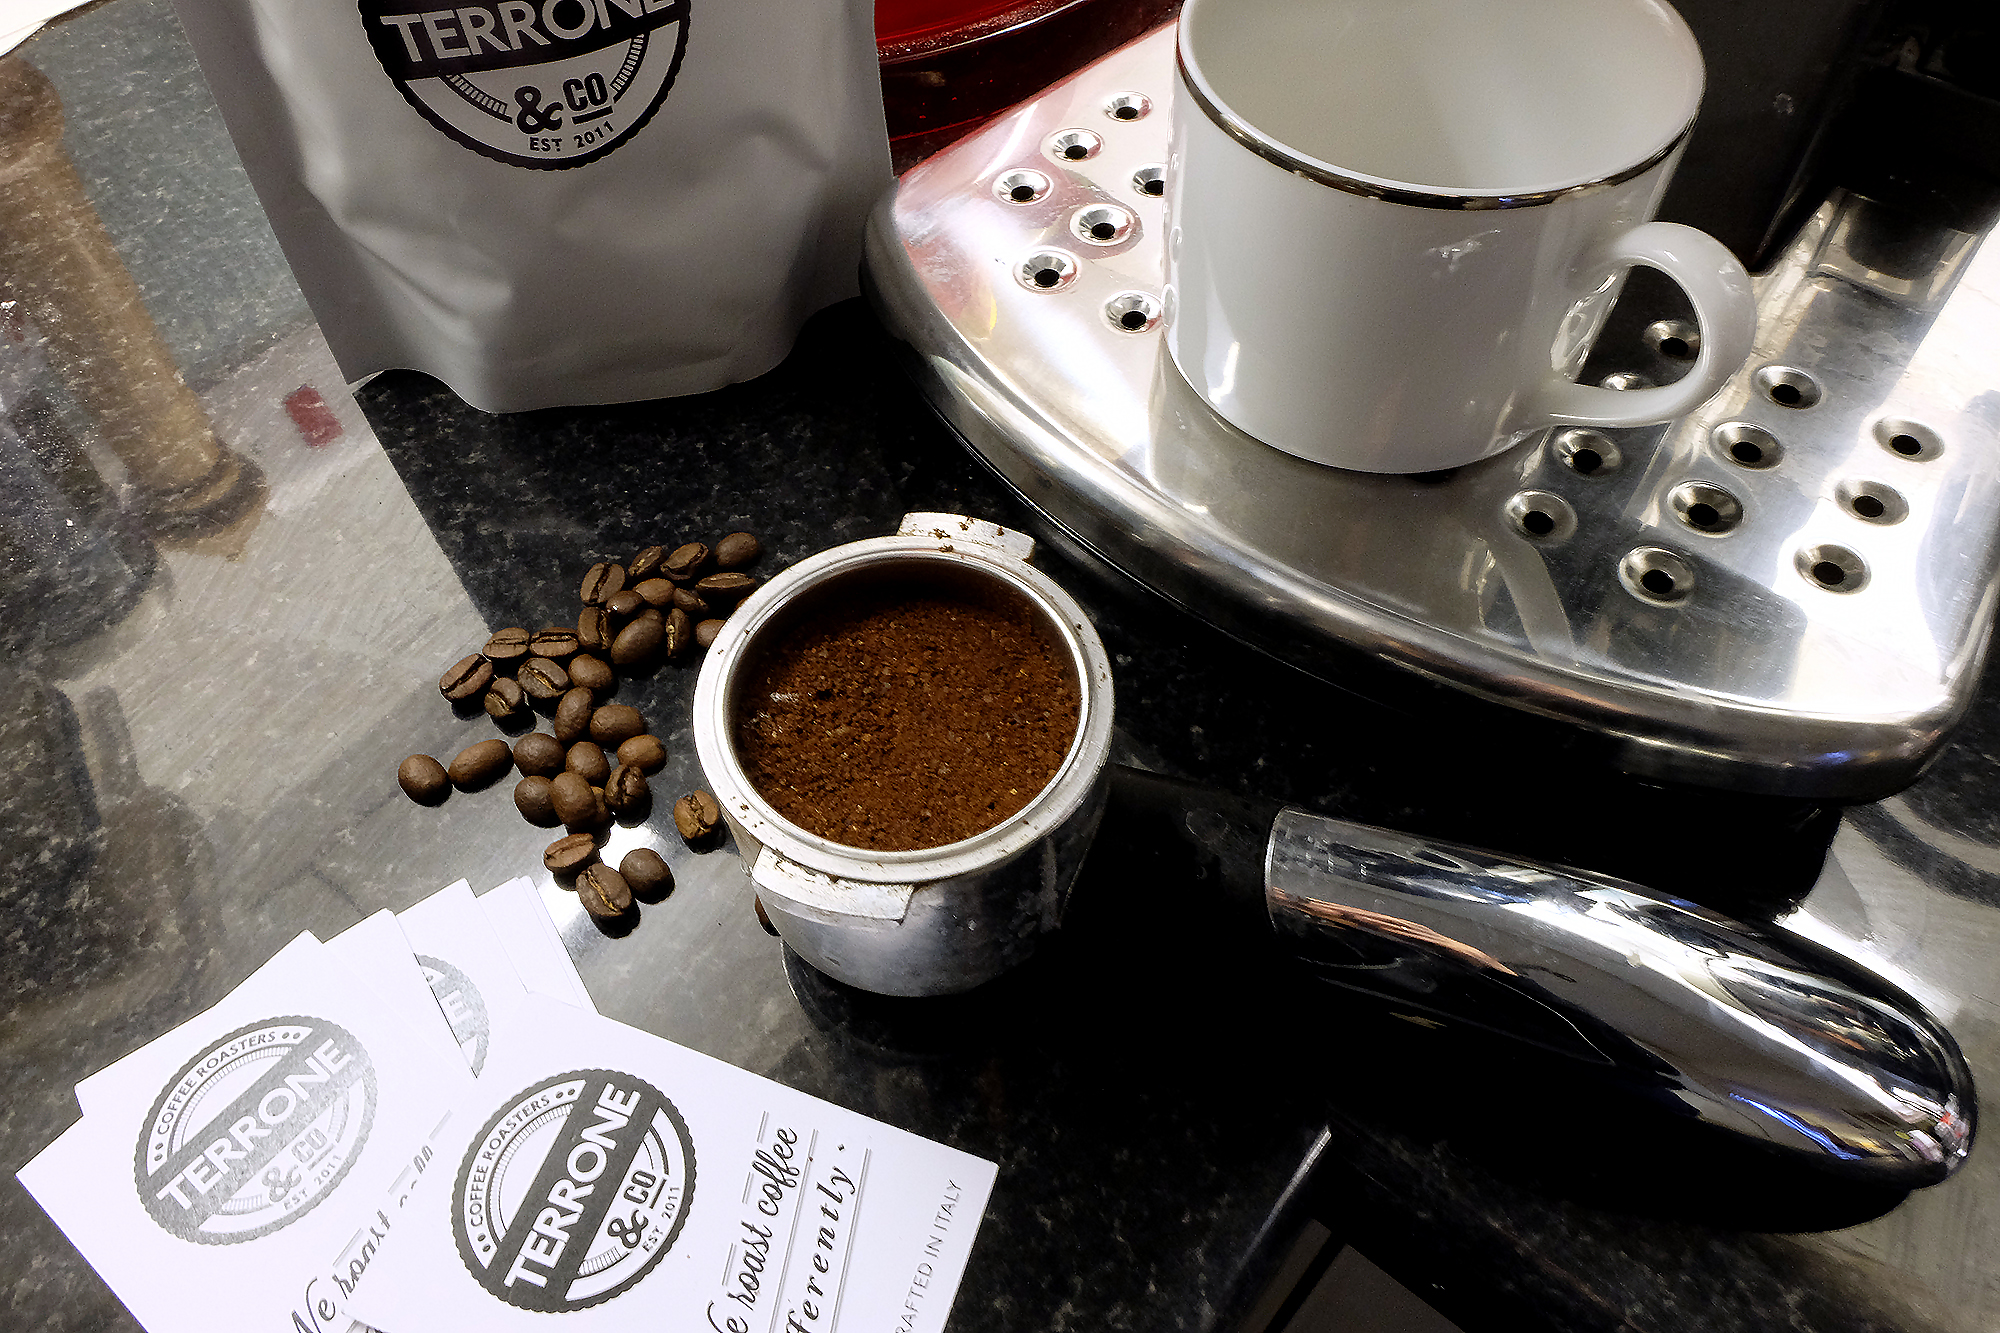 A recipe with a difference – Terrone Arabica coffee soap